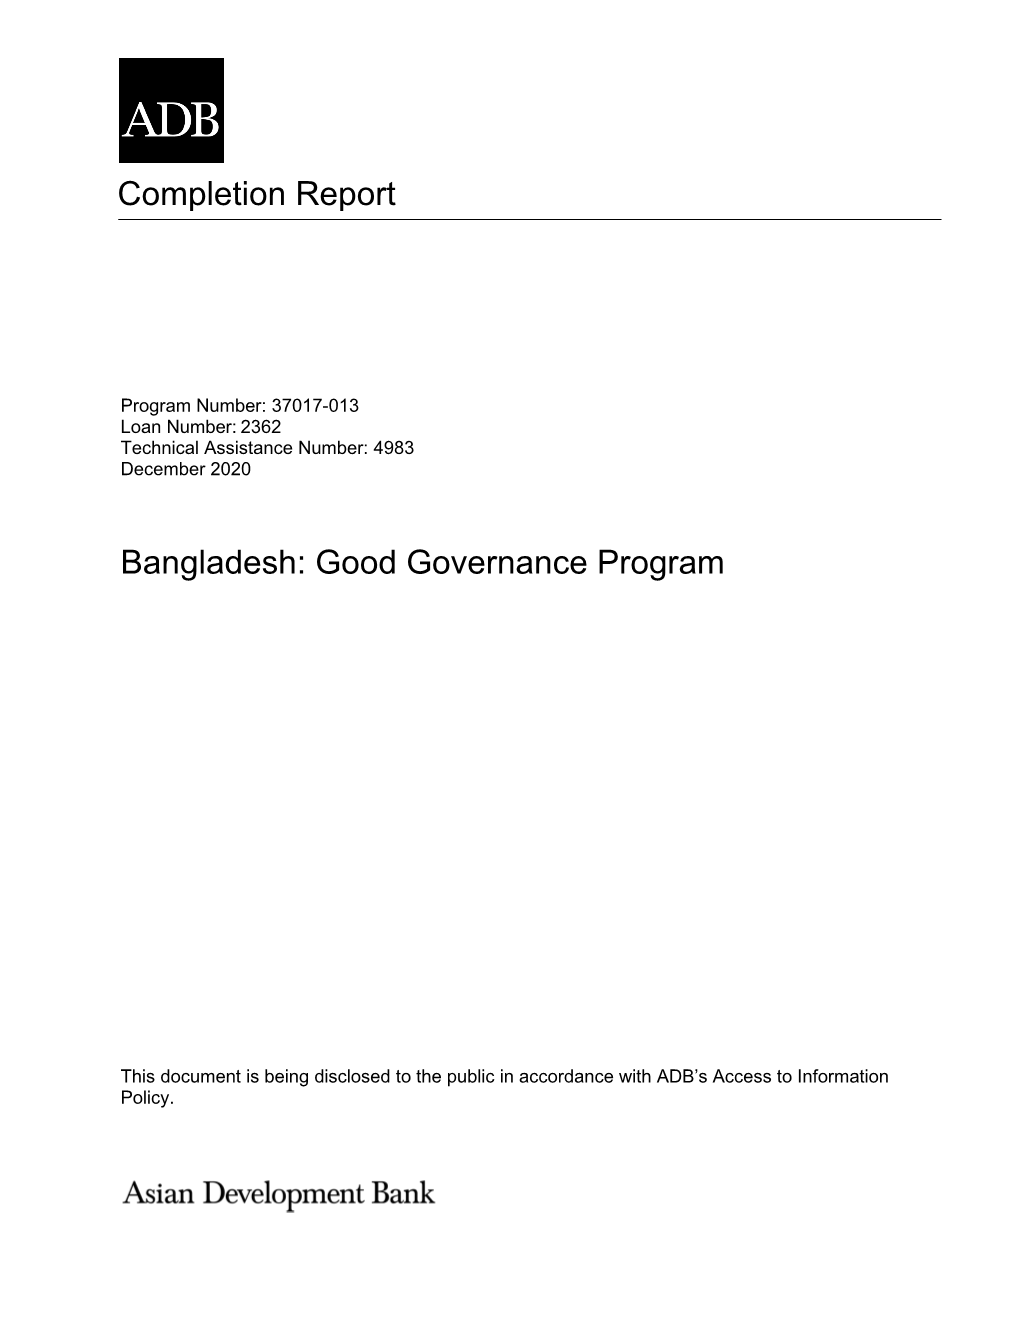 Completion Report Bangladesh: Good Governance Program